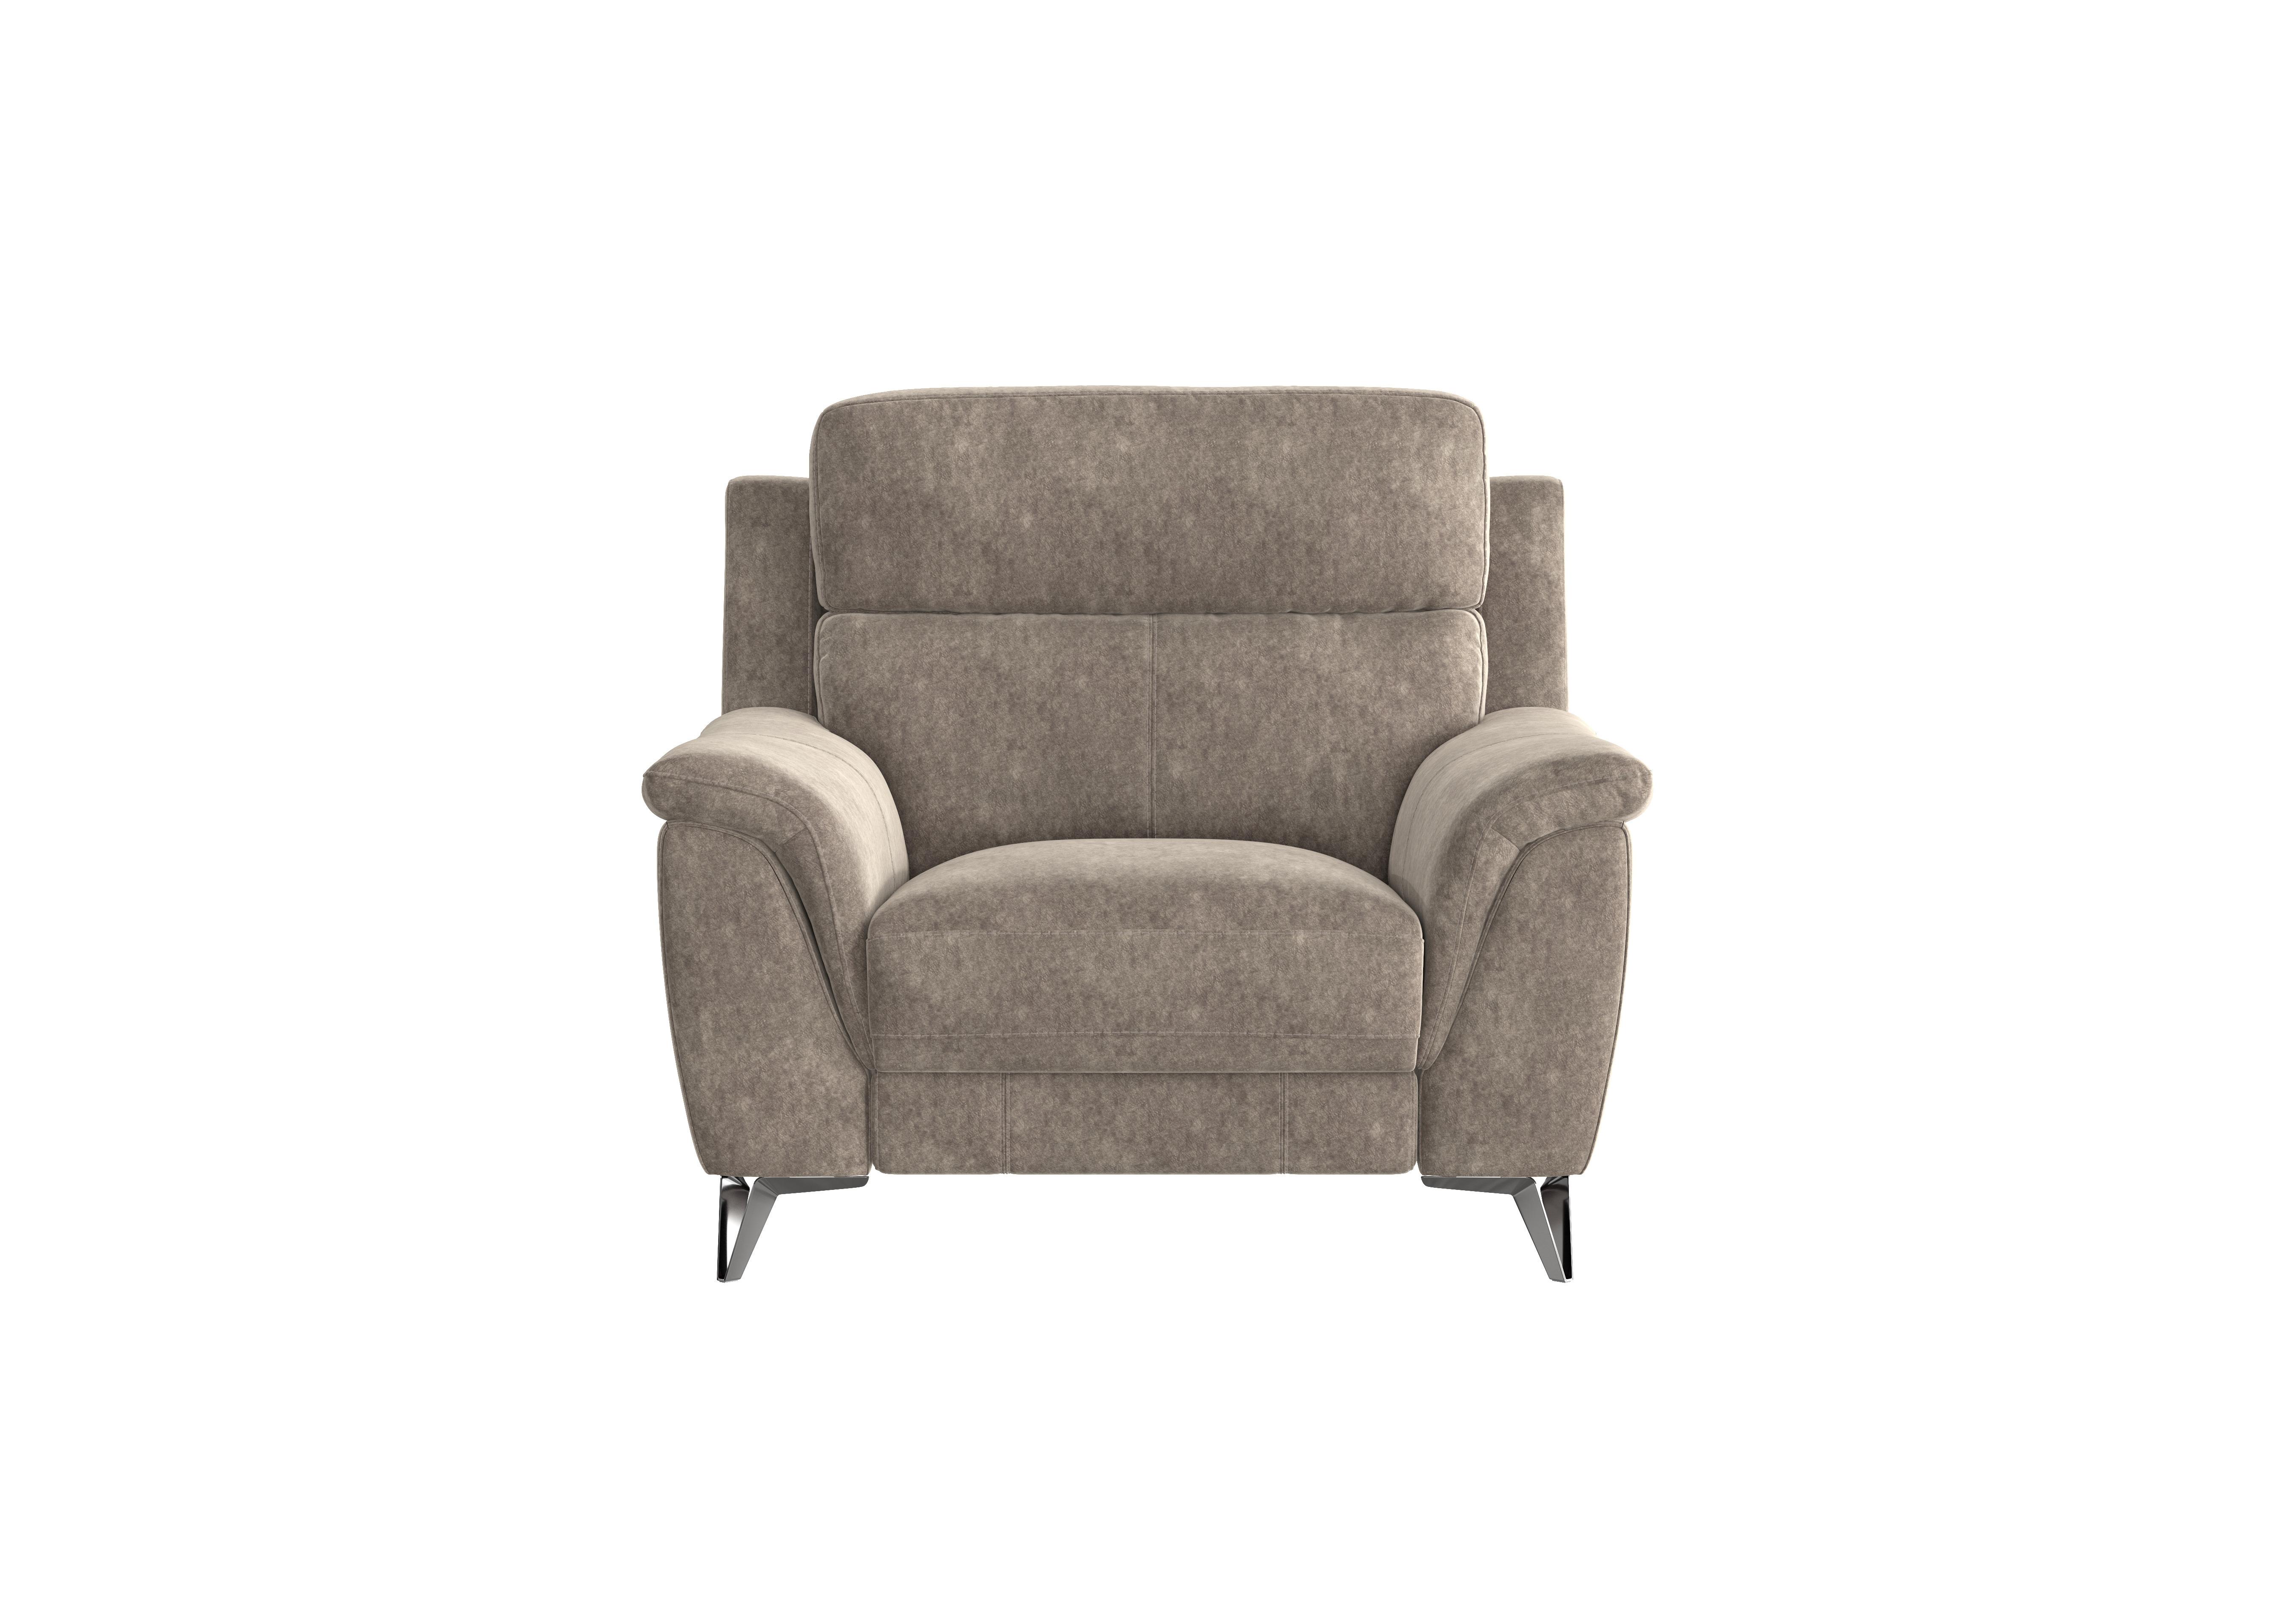 Contempo Fabric Armchair in Bfa-Bnn-R29 Fv1 Mink on Furniture Village